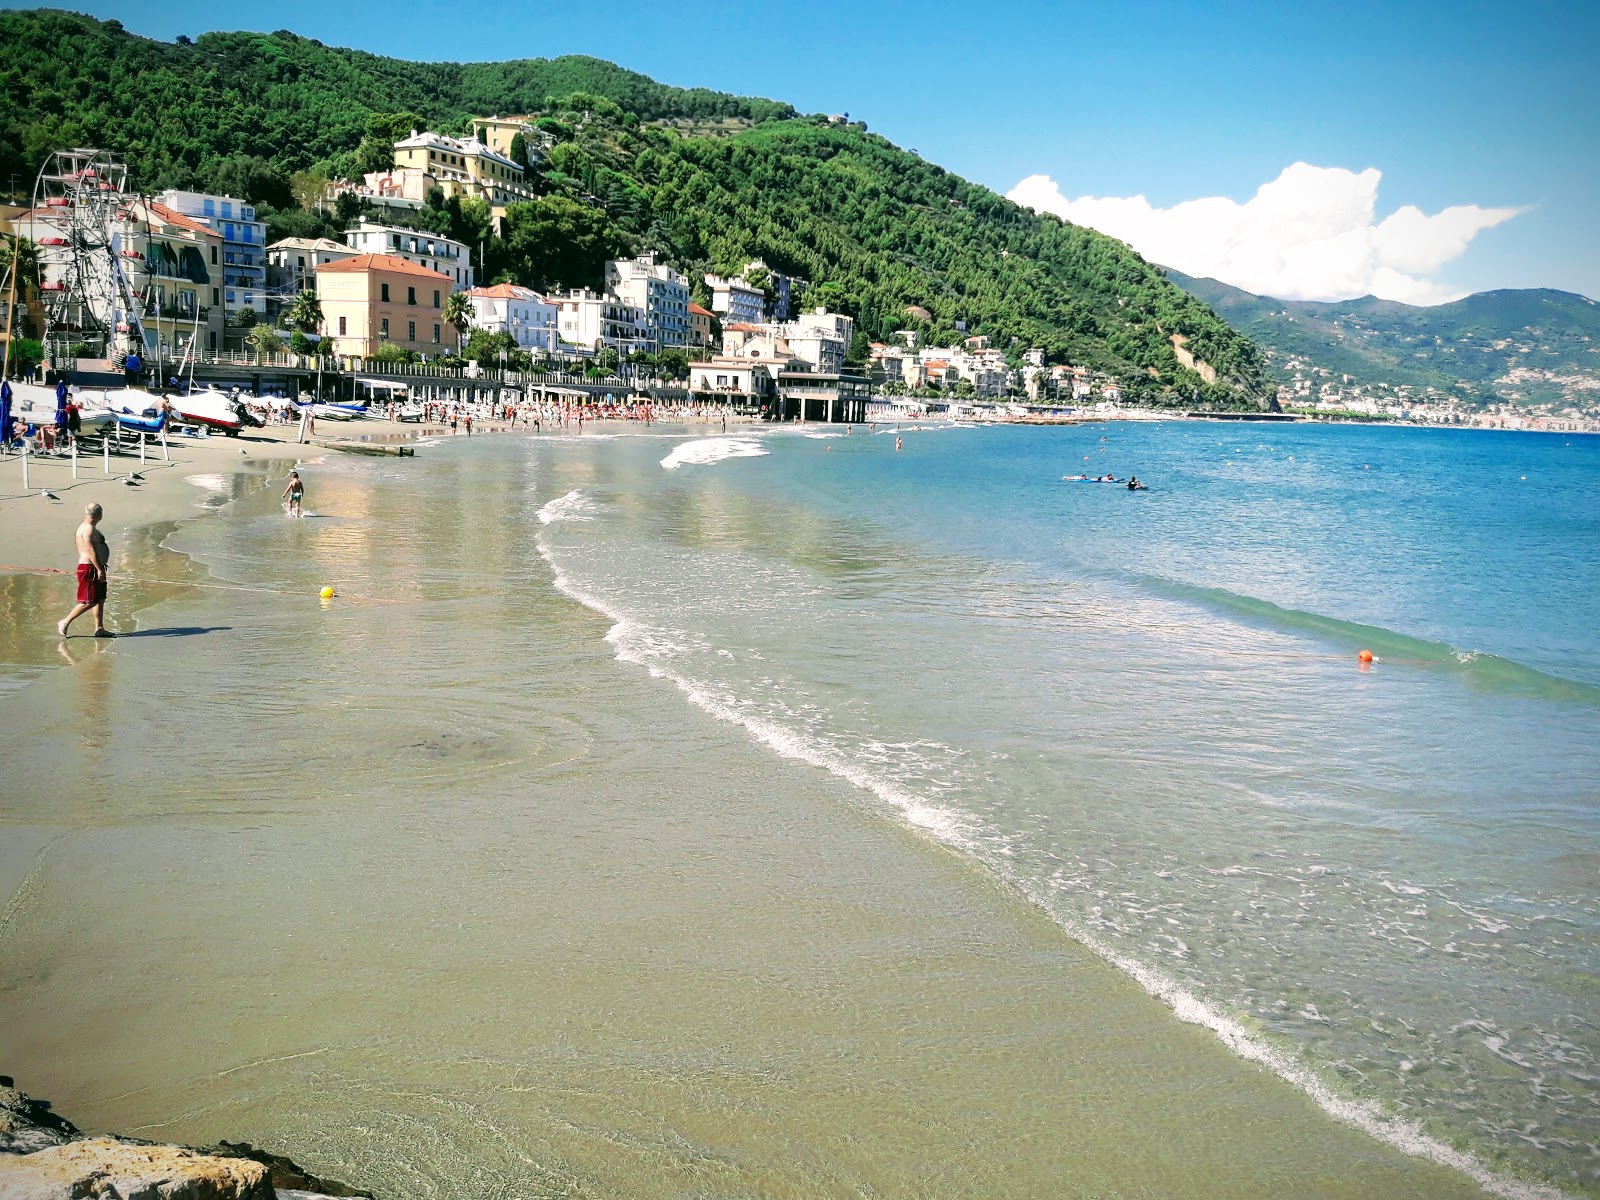 Foto av Spiaggia di Laigueglia med brunsand yta